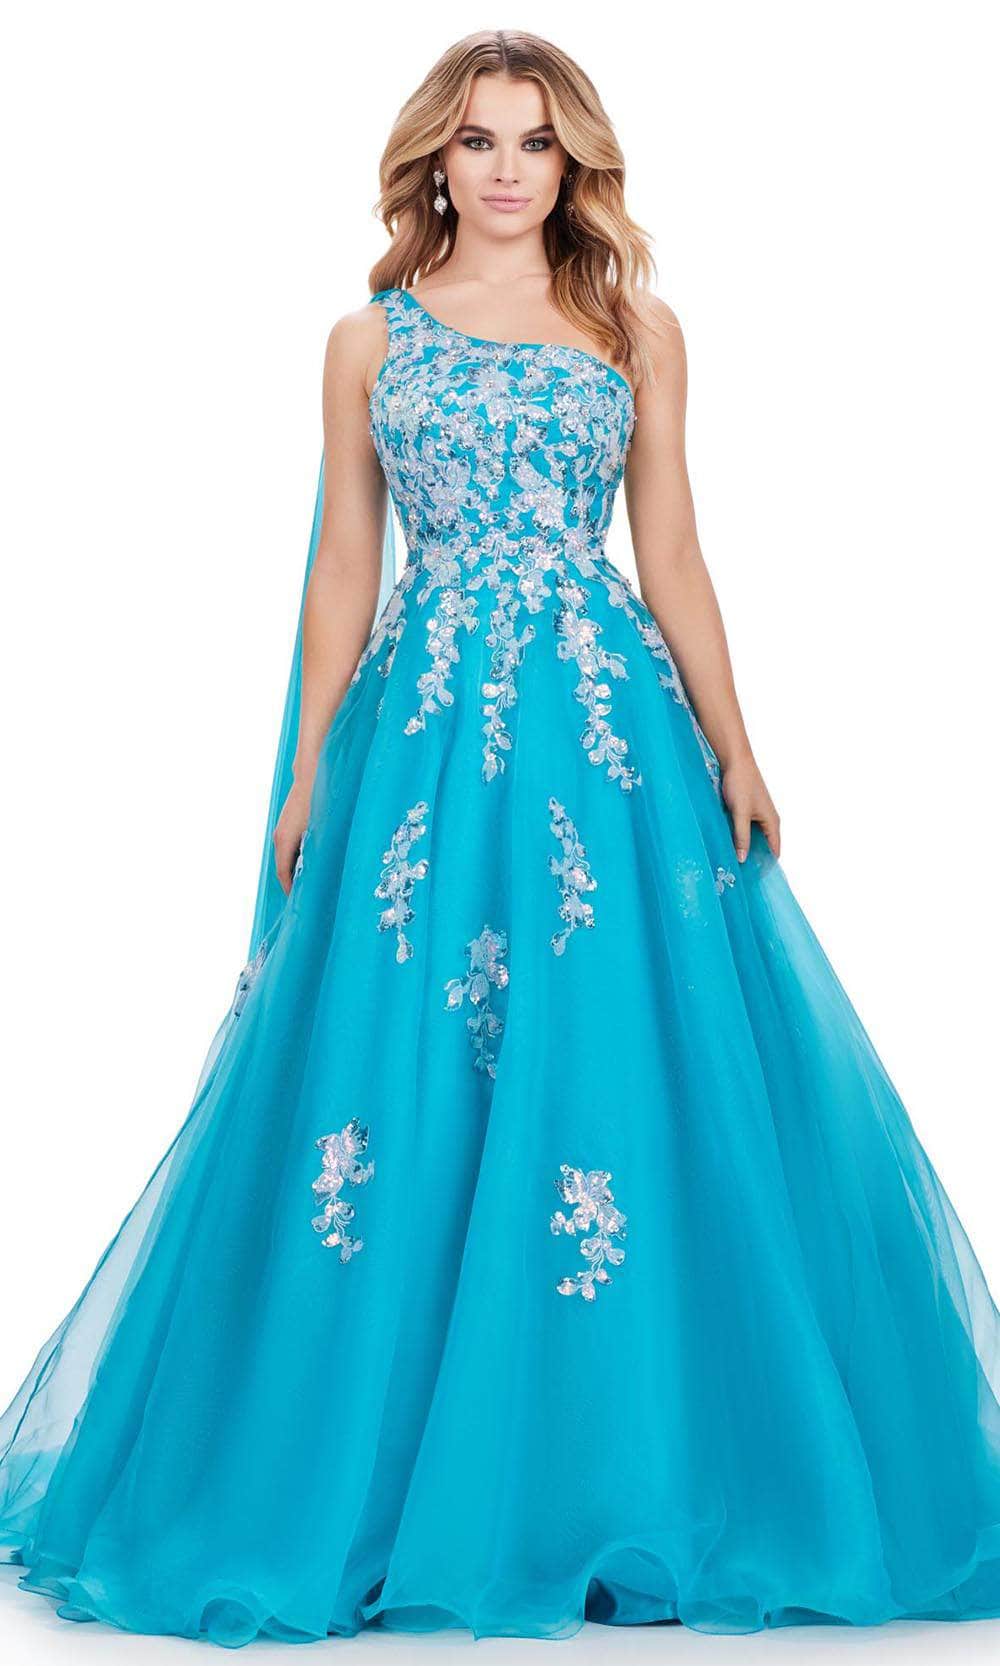 Ashley Lauren 11573 - One Shoulder Sequin Prom Dress 00 /  Turquoise